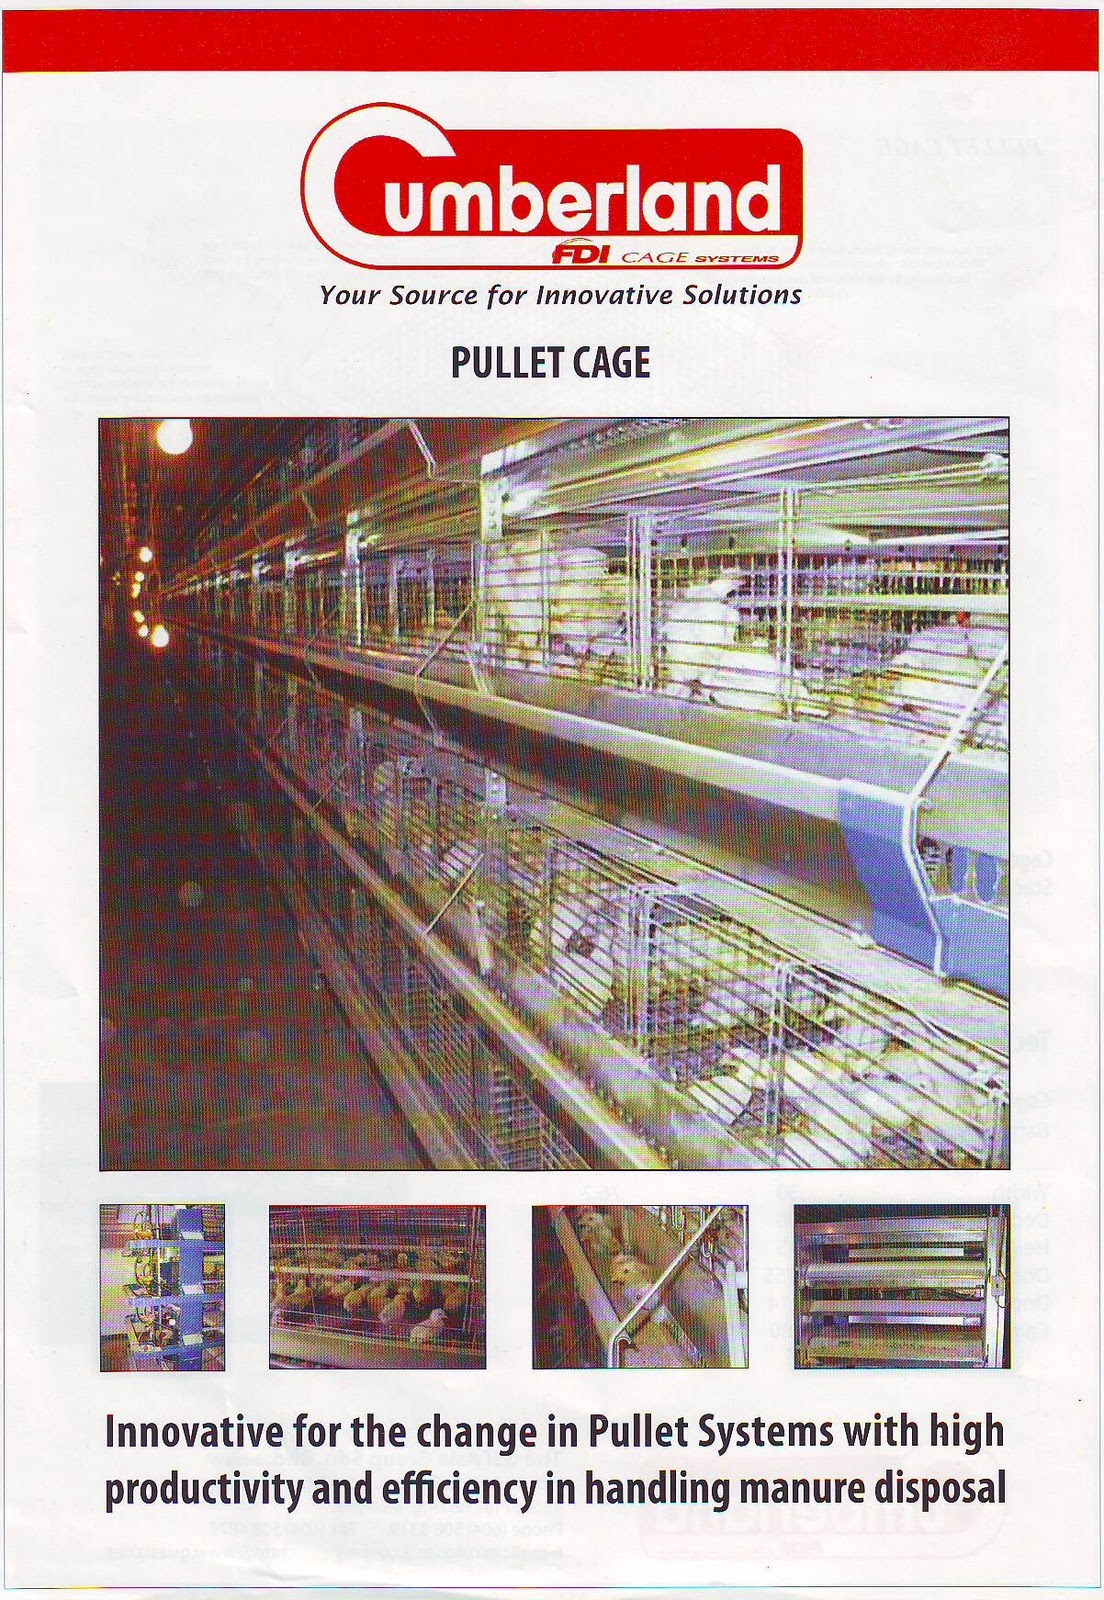 CV SINAR MUSTIKA: (GSI Group) Cumberland Pullet Cage System